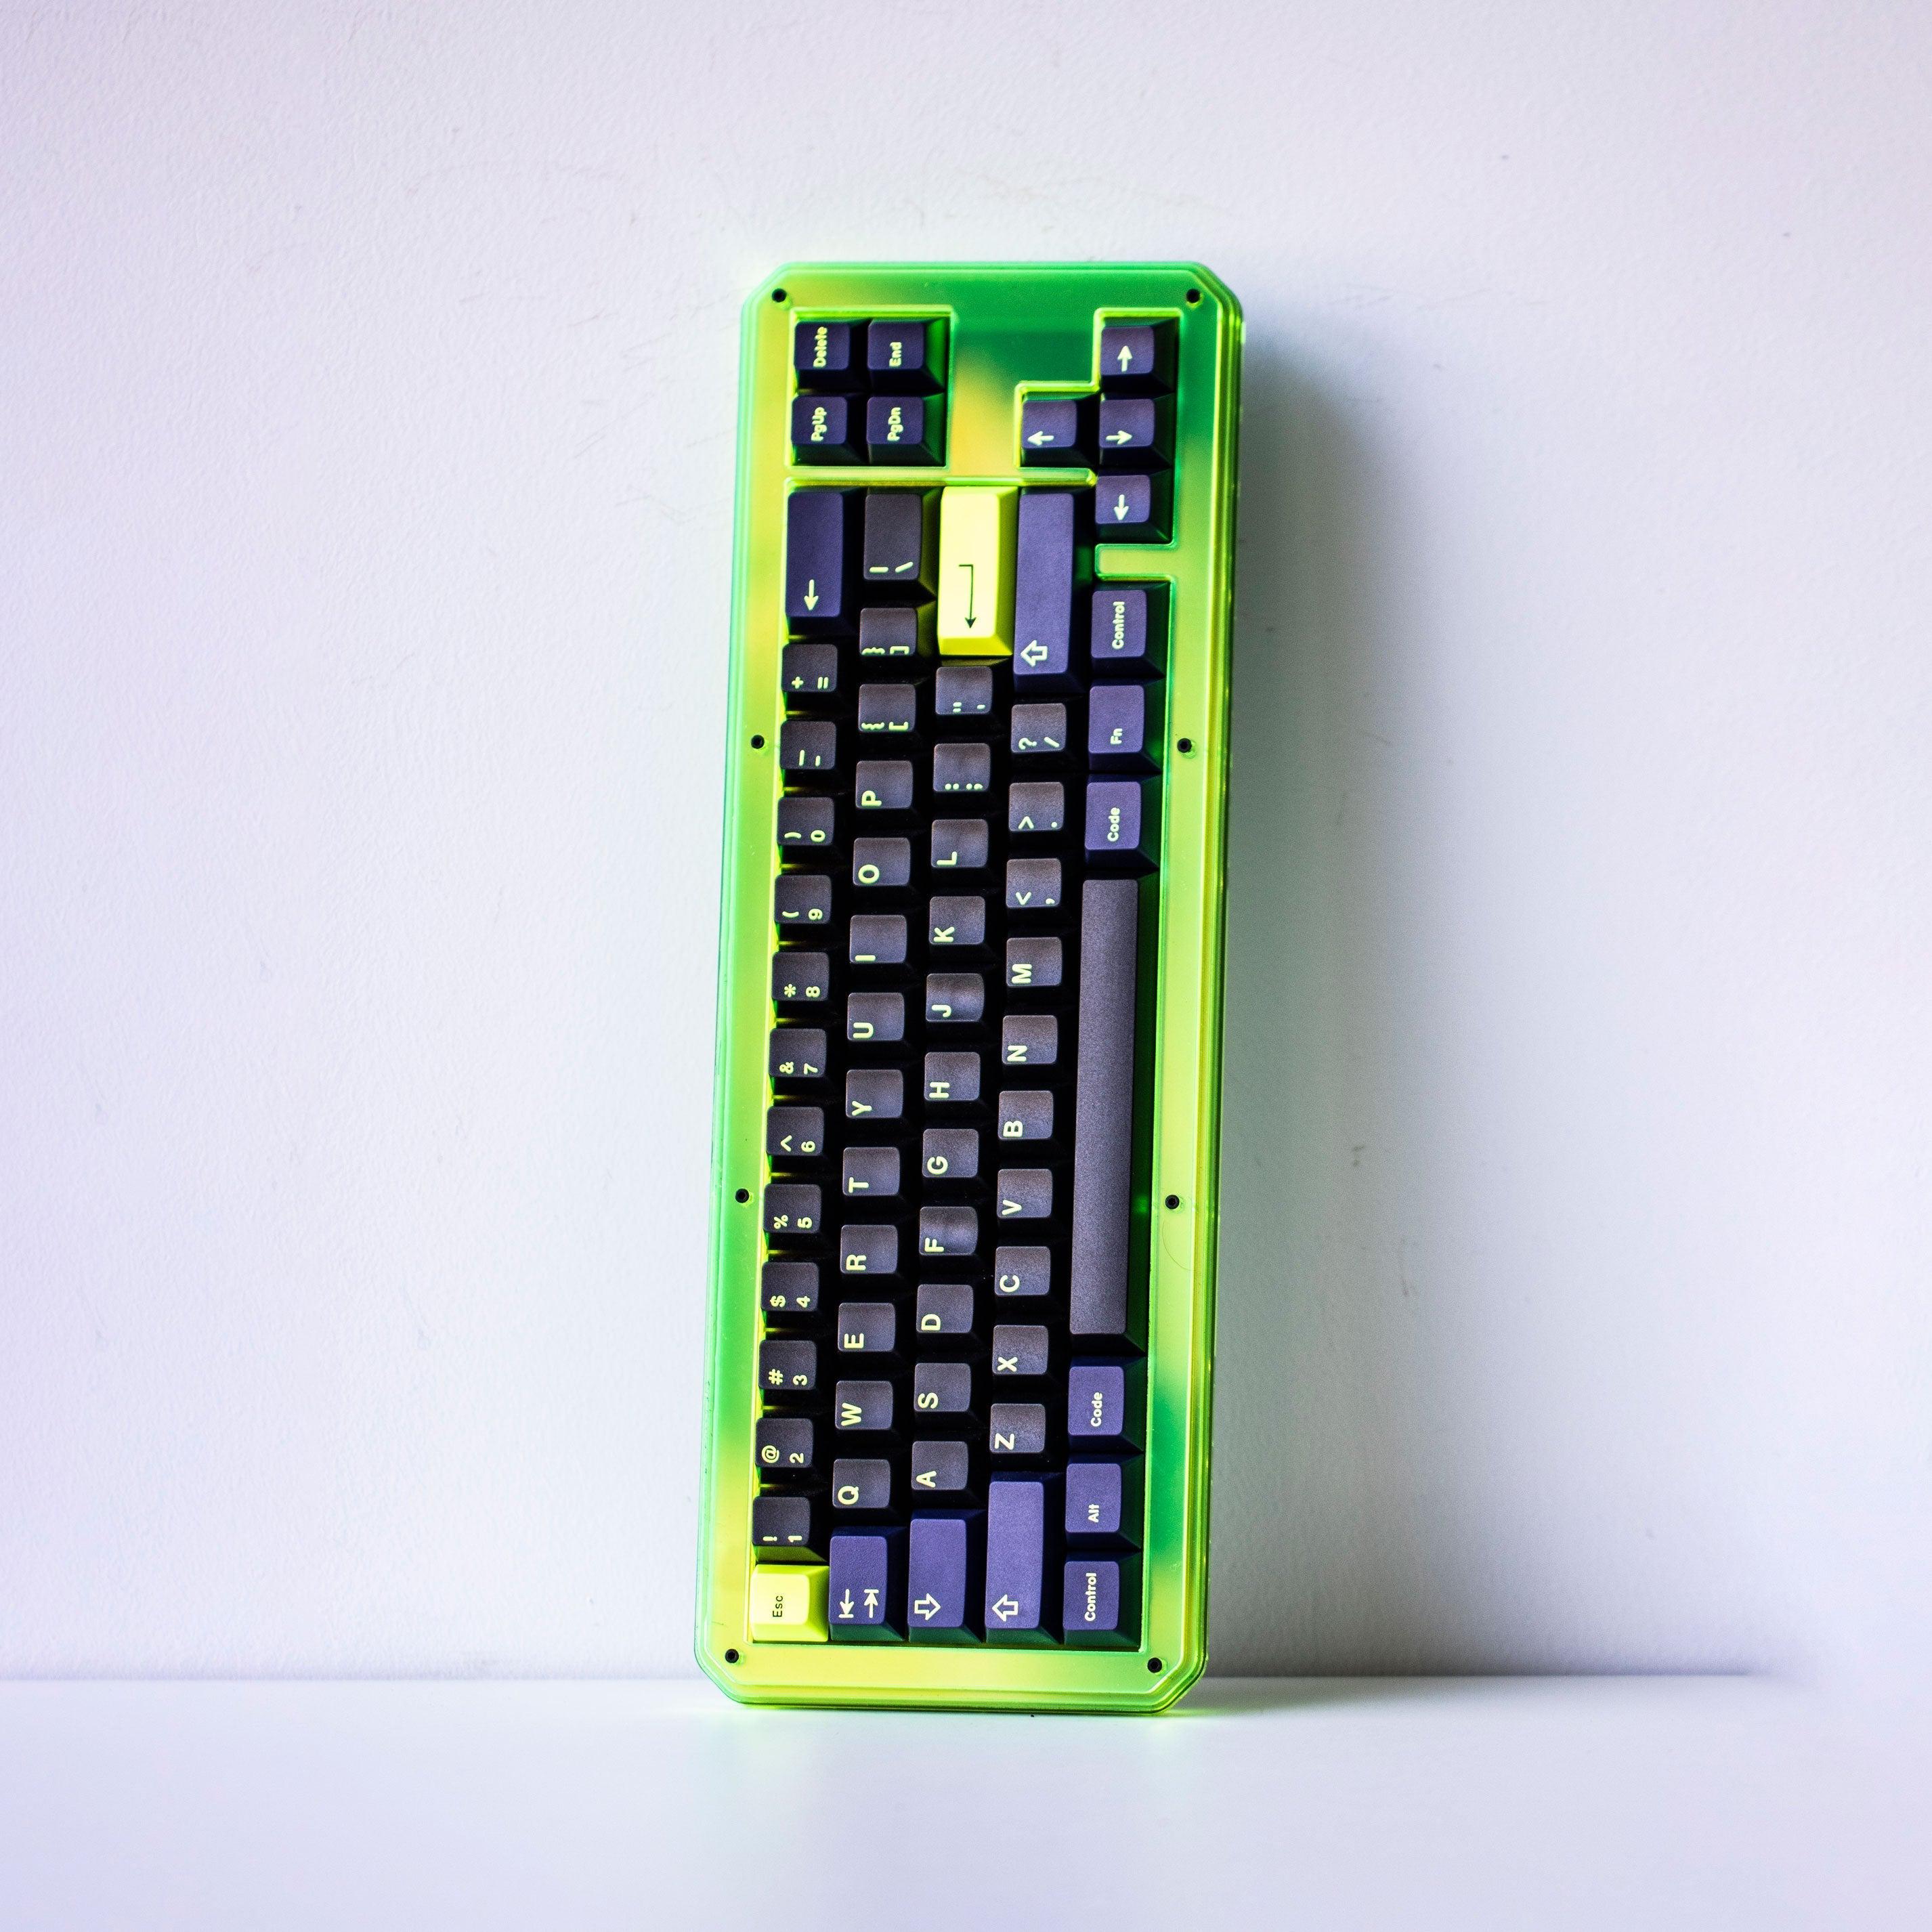 Stellar65 - Night Runner Edition-keyboard-keypad-mechanical keyboard-gaming keyboard-custom keyboard